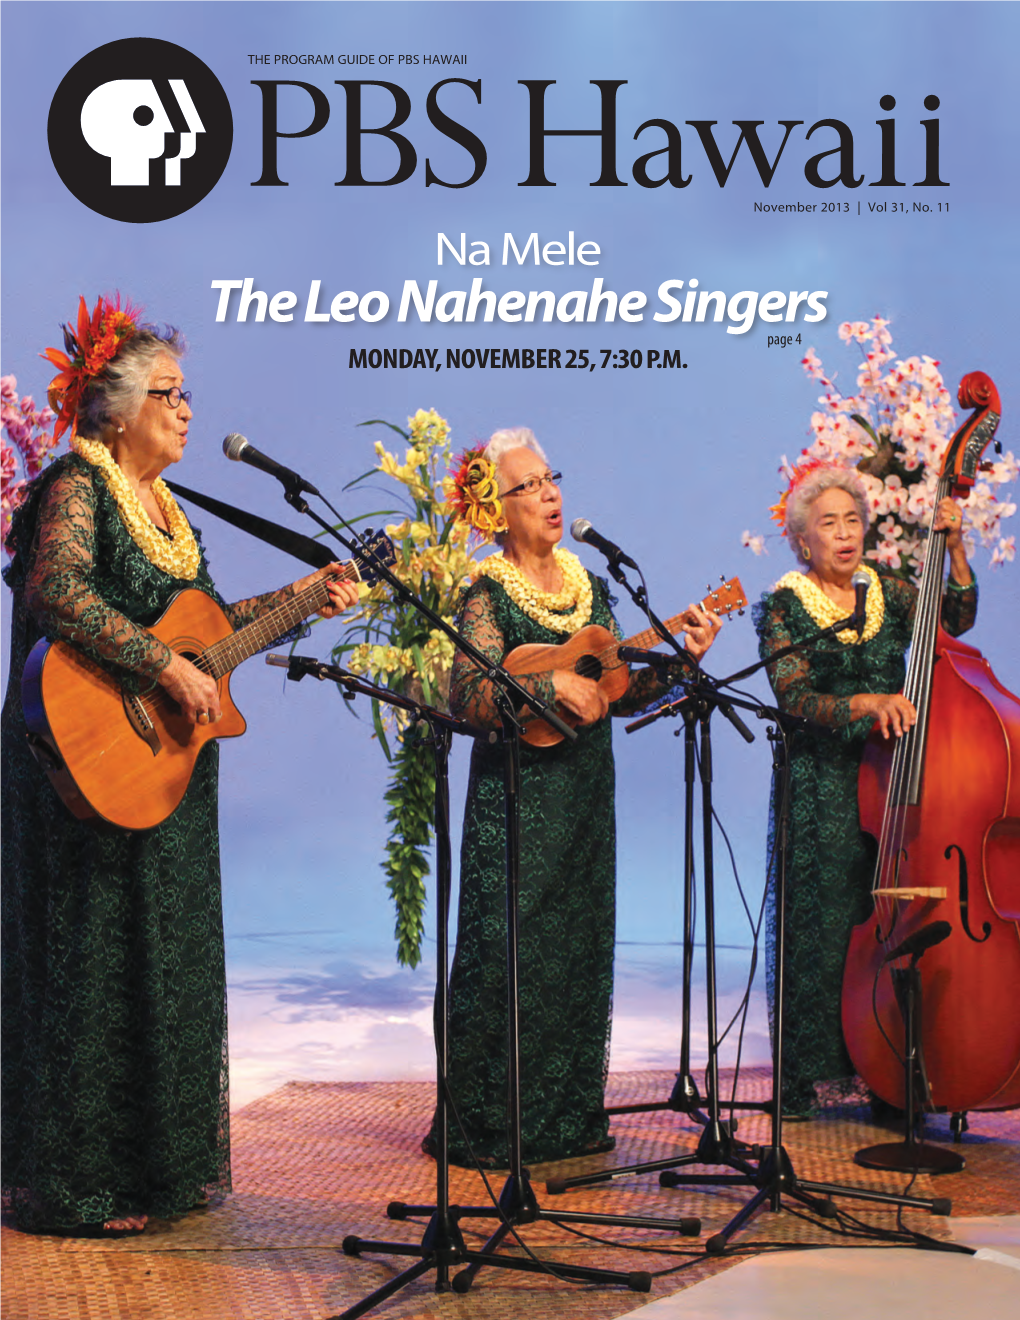 Na Mele the Leo Nahenahe Singers Page 4 Monday, November 25, 7:30 P.M